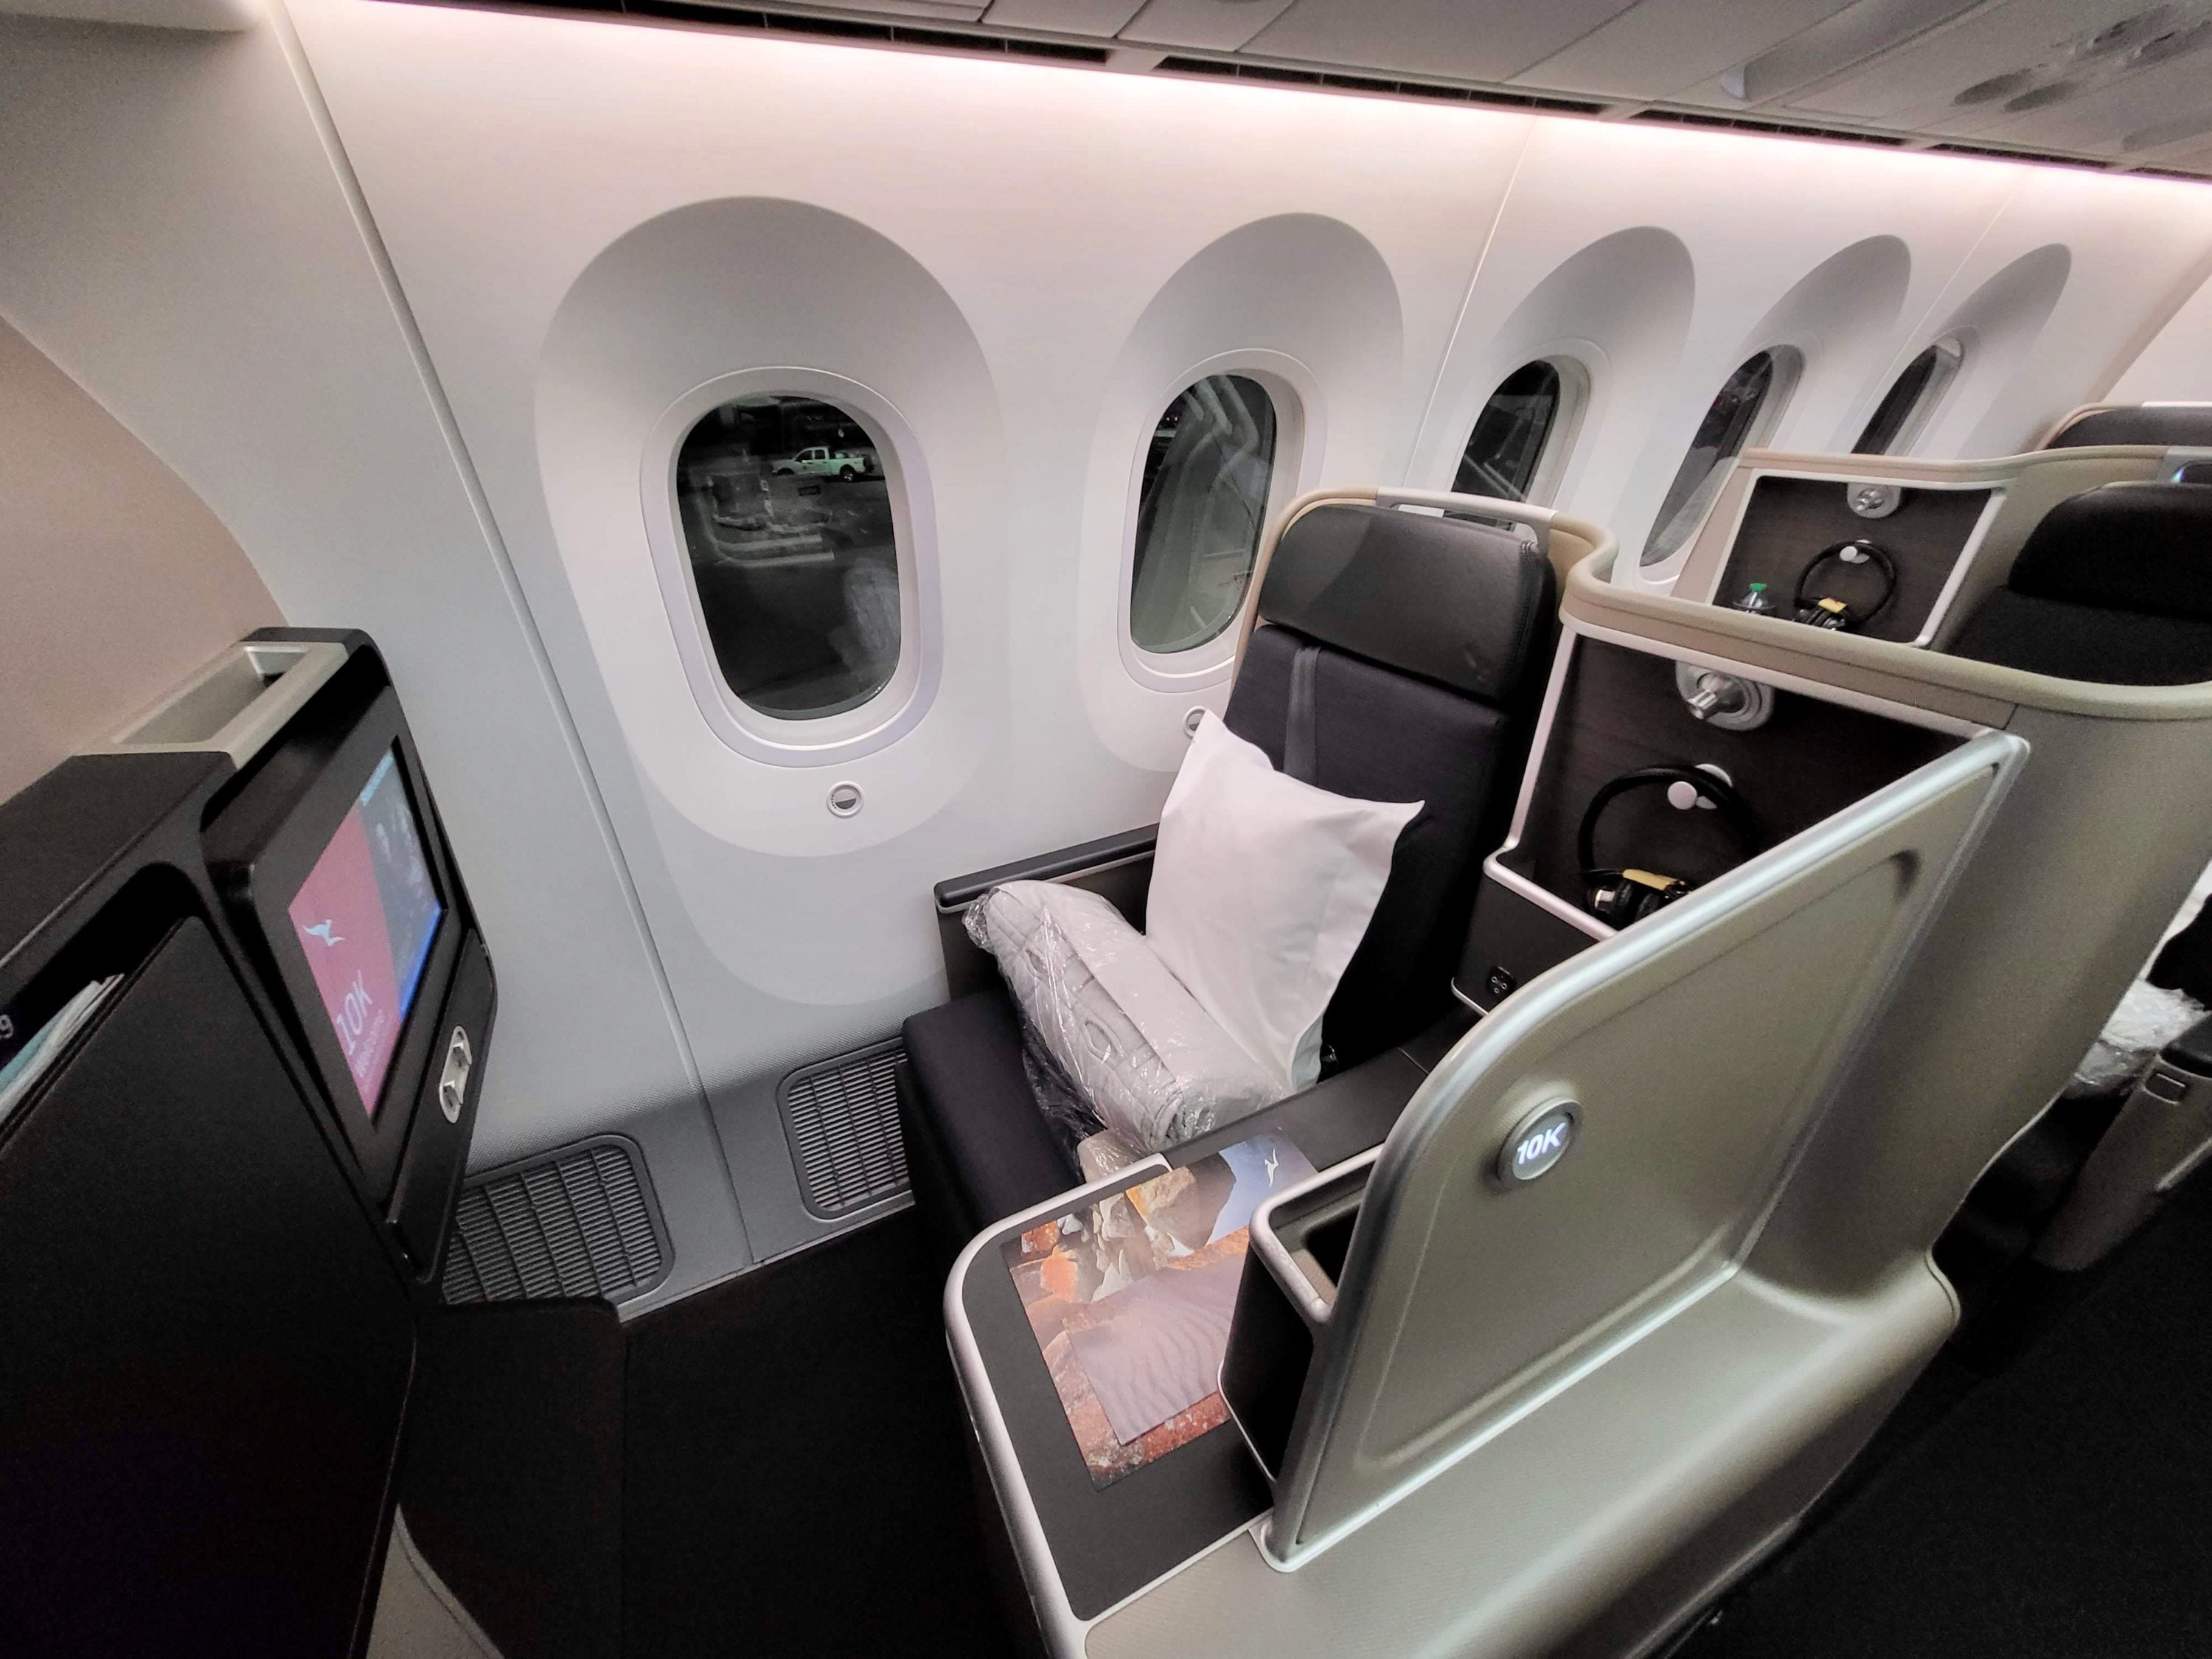 Qantas Airways business class seat